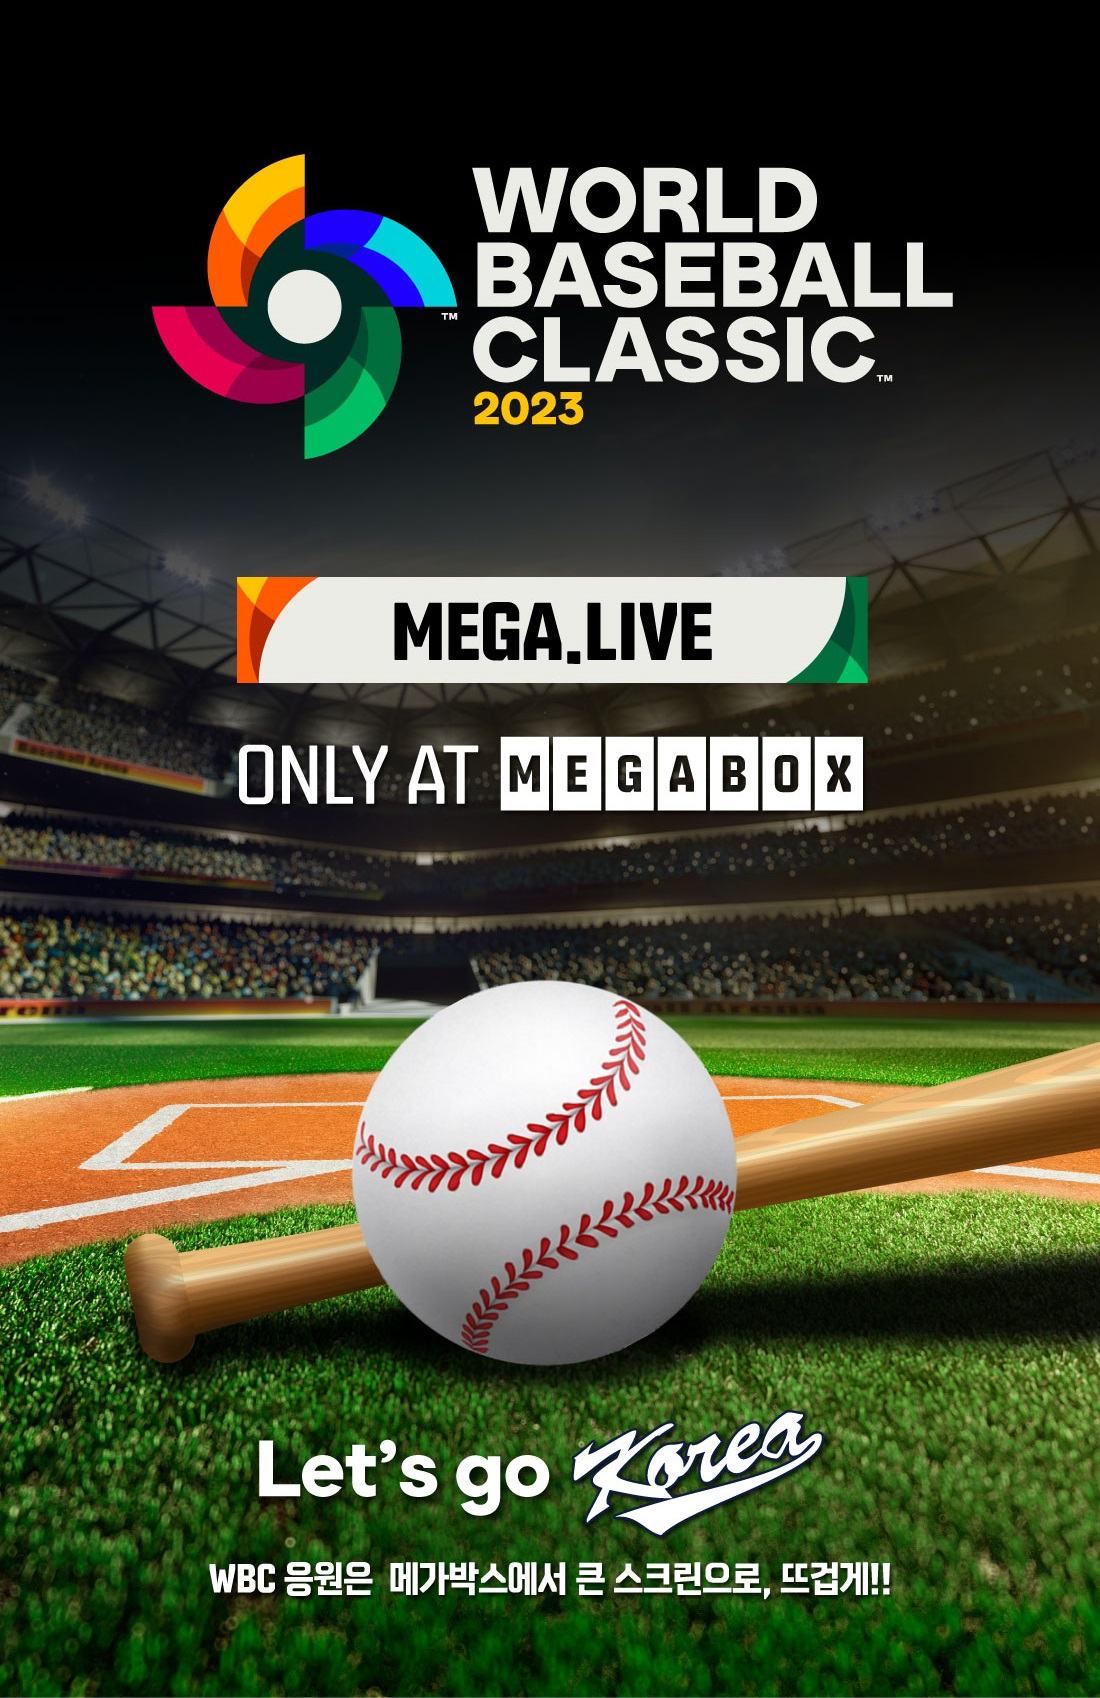 Poster image shows World Baseball Classic's live stream event at Megabox (Megabox)